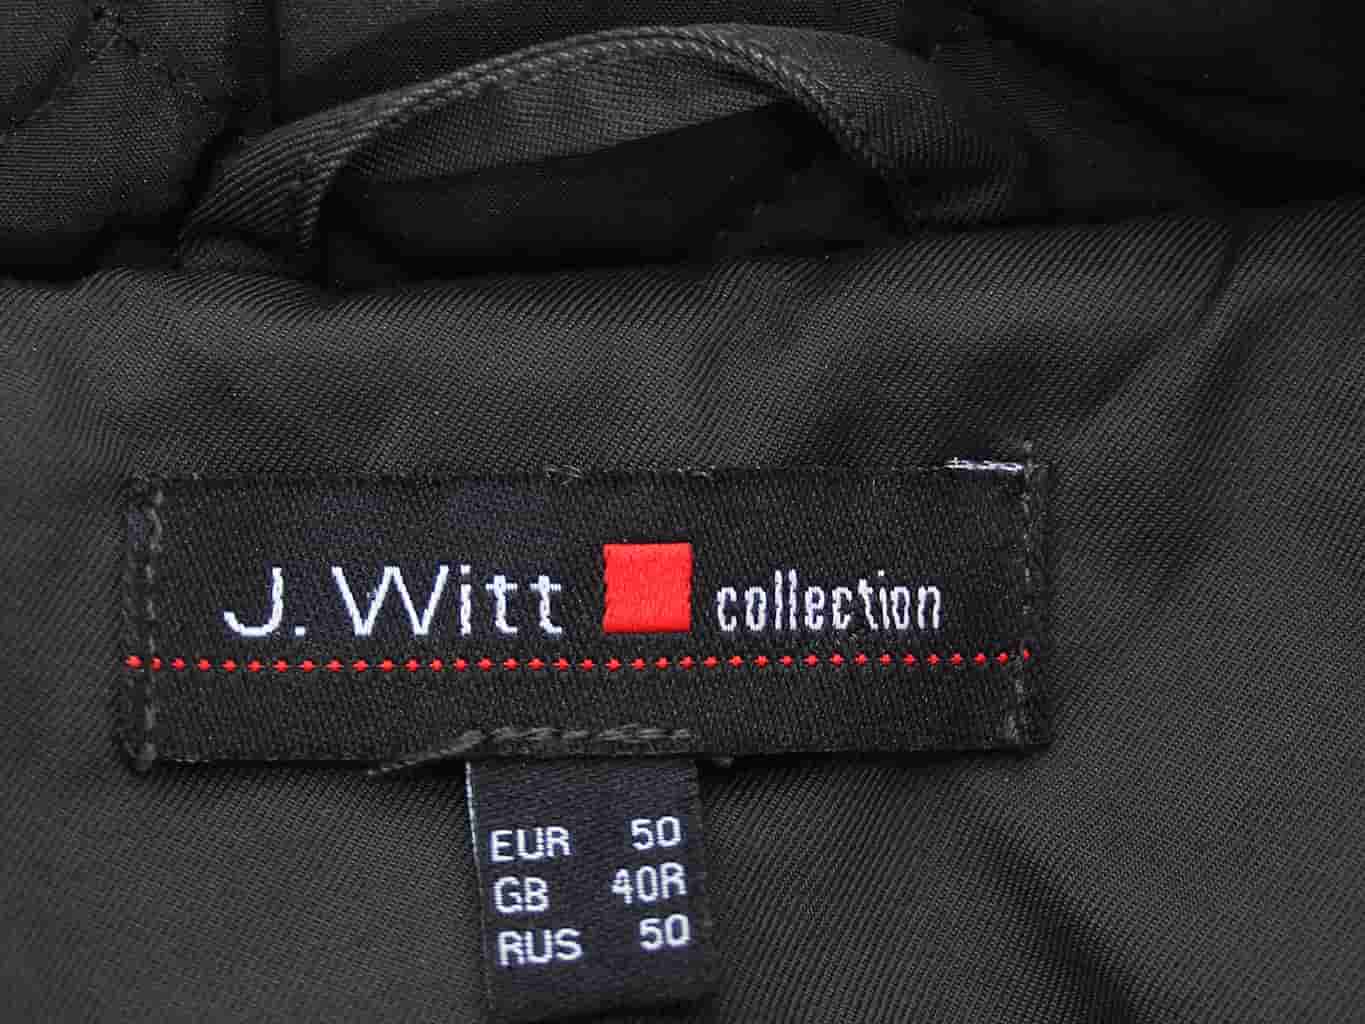 Witt Интернет Магазин Распродажа